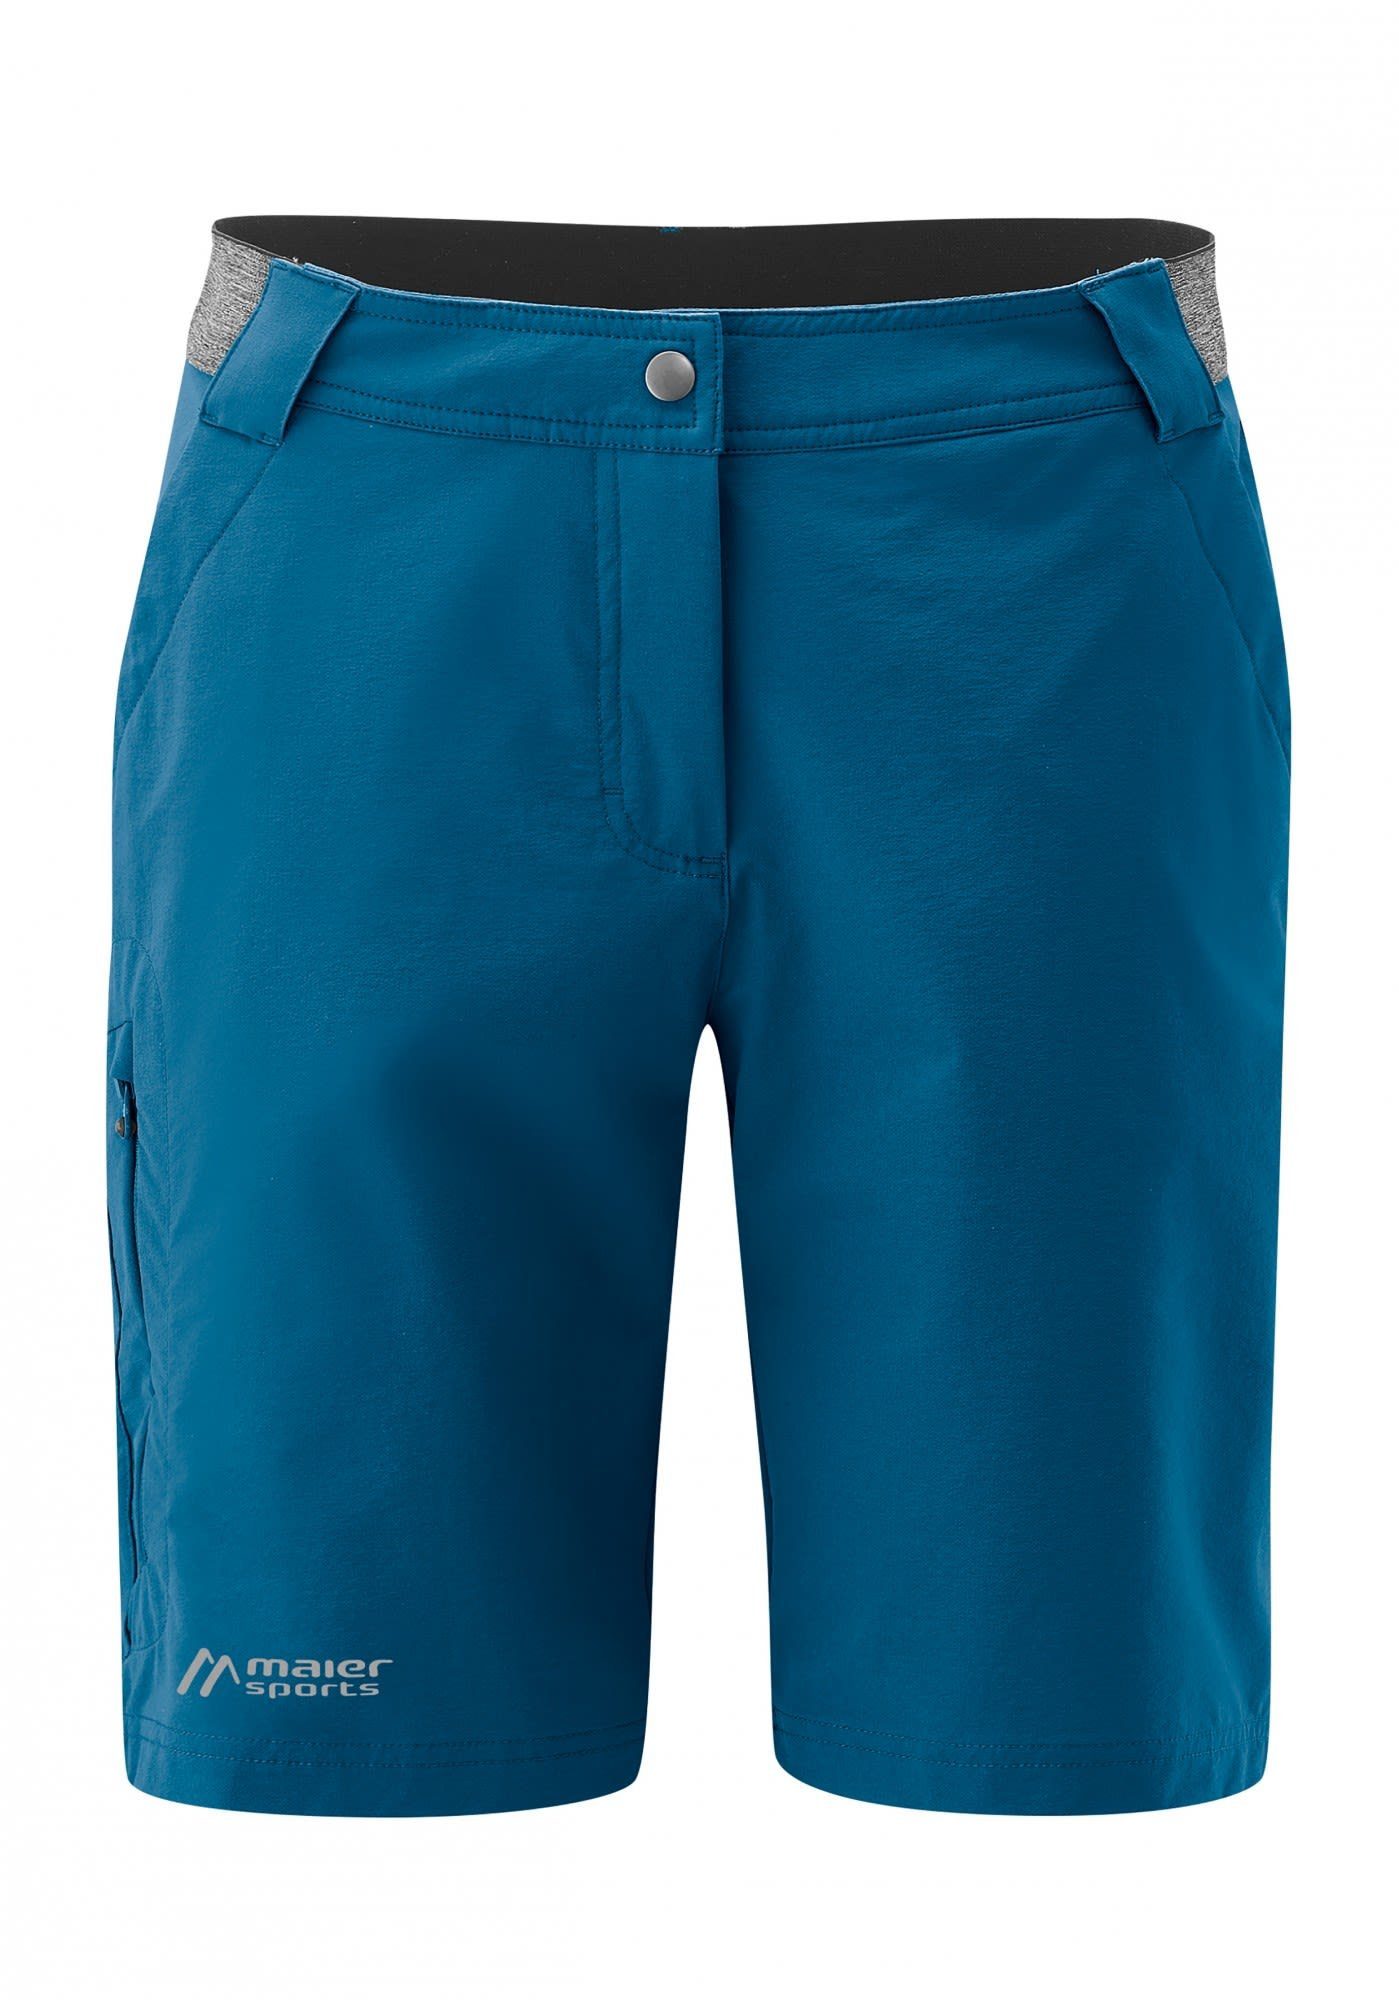 Maier Sports Strandshorts Maier Sports Blue Sapphire Norit Damen Short Shorts W